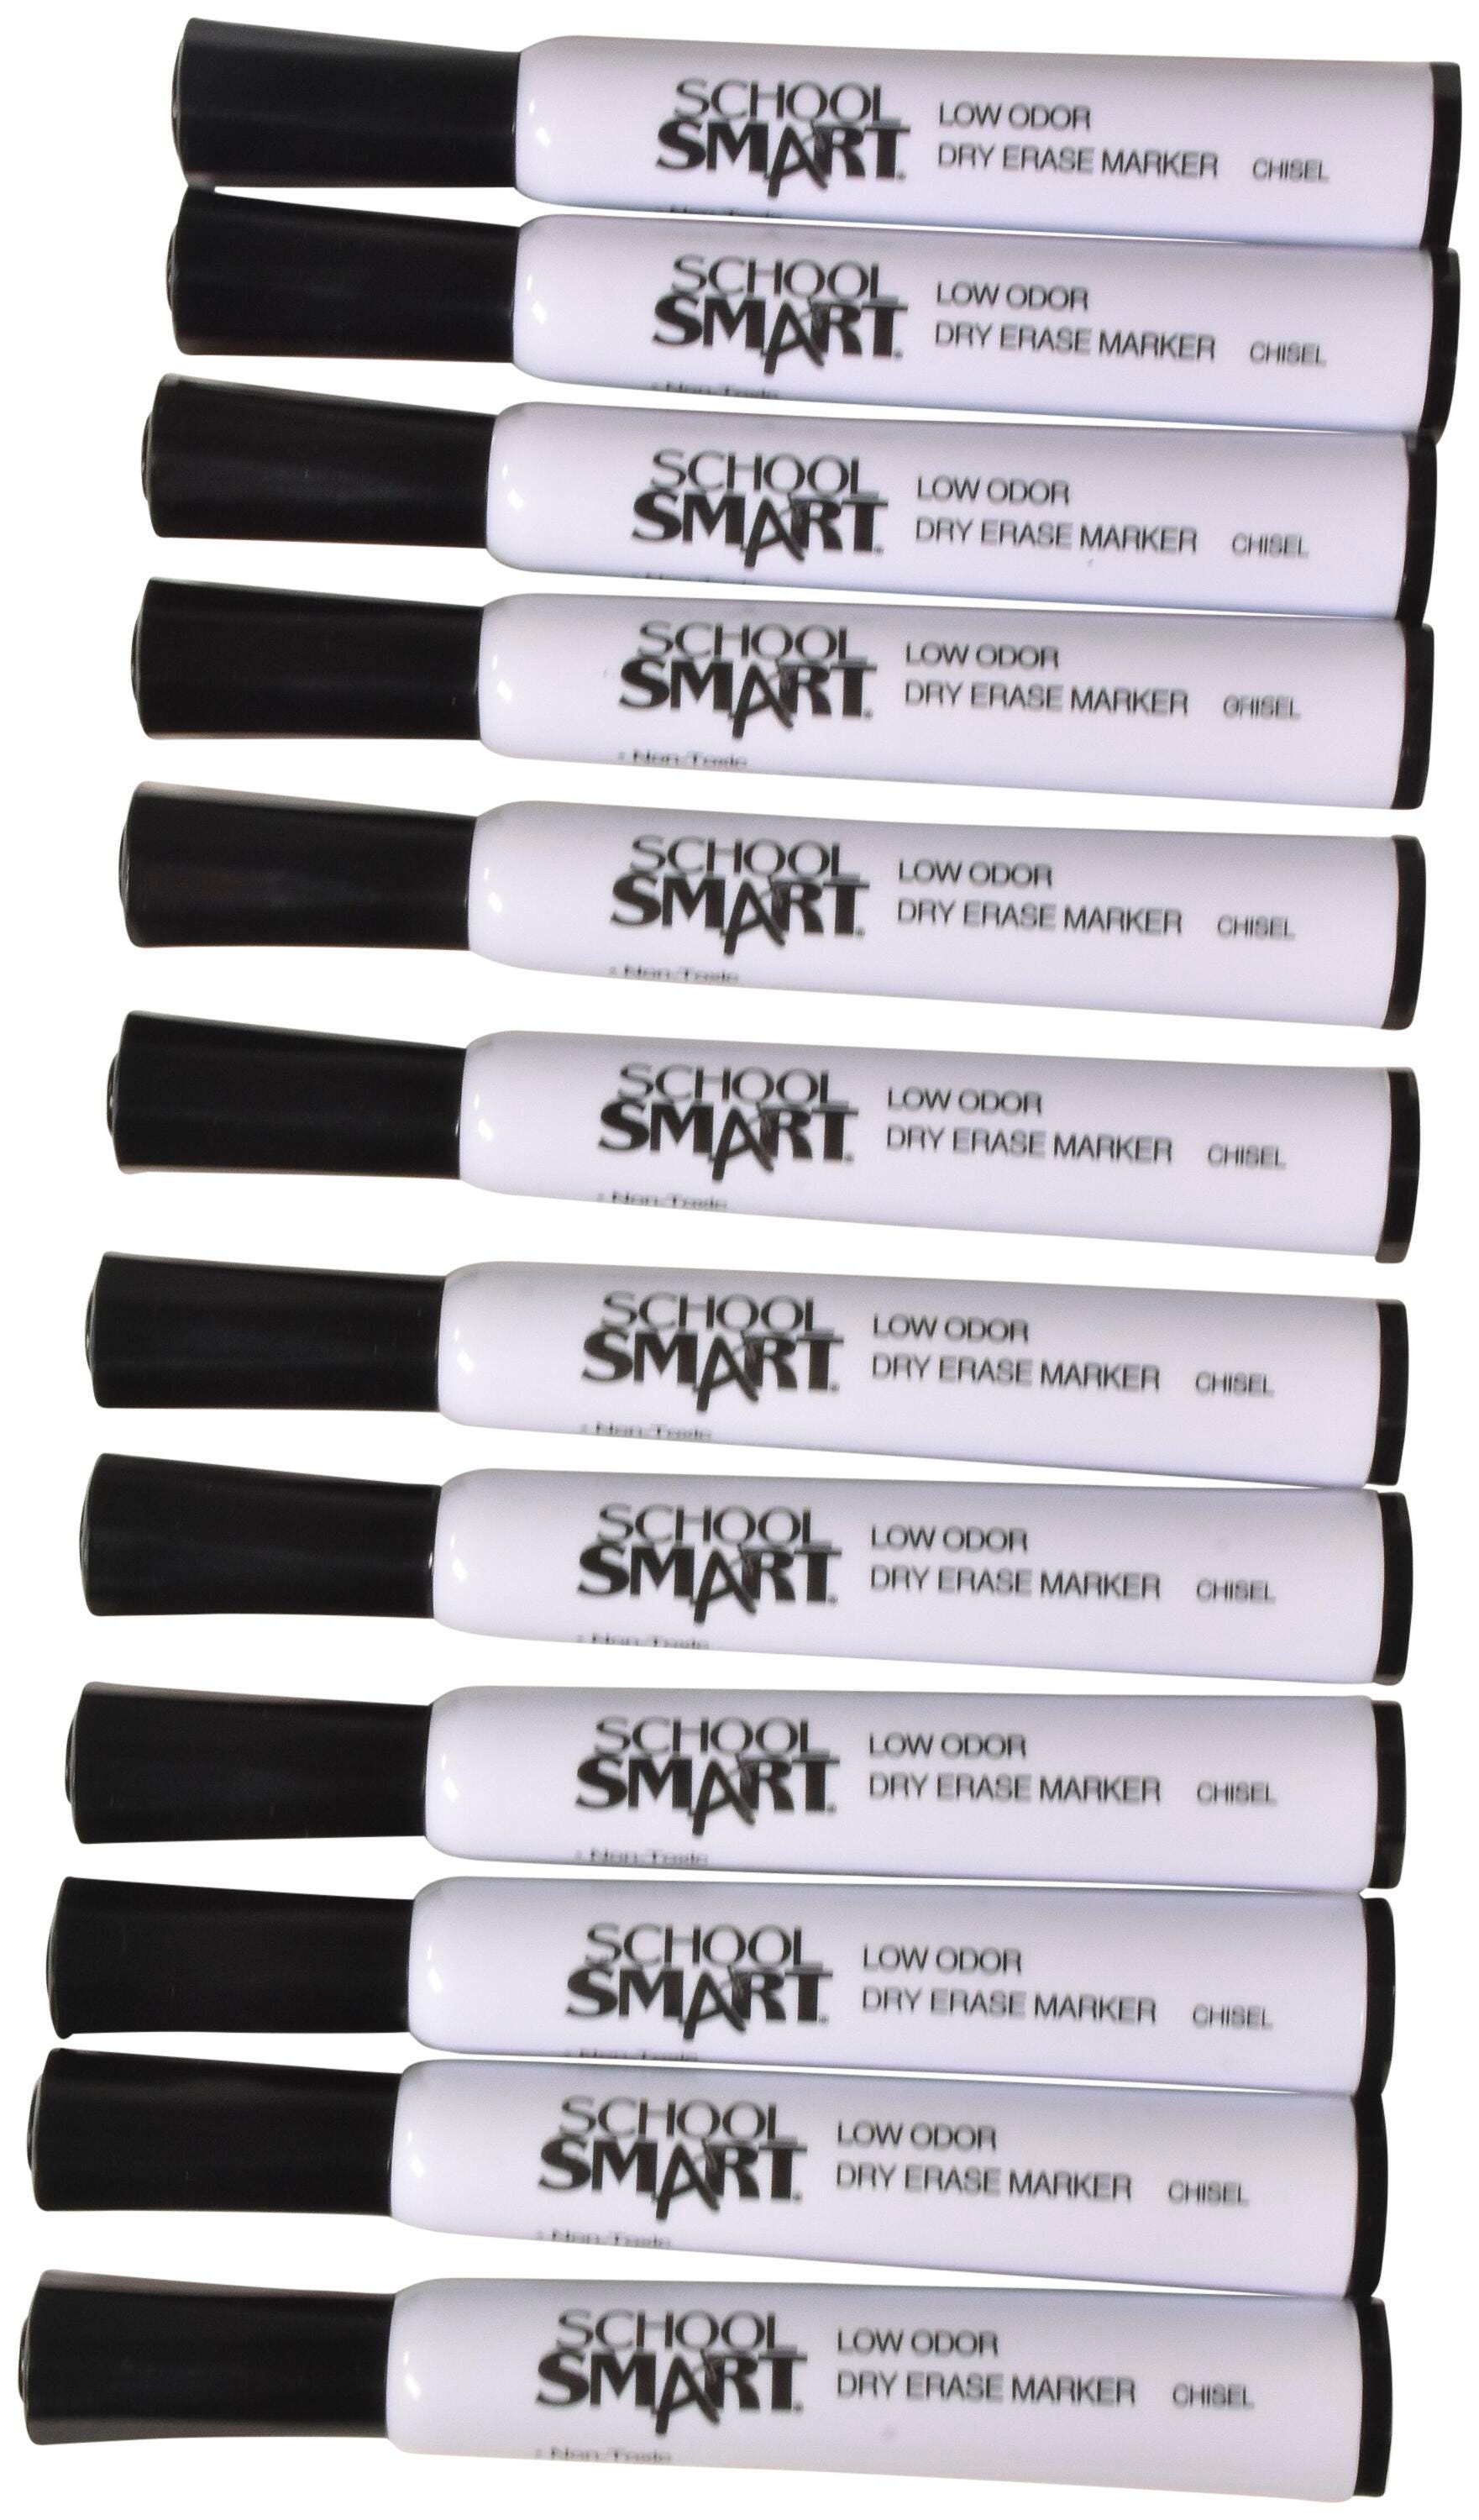 School Smart Dry Erase Markers, Chisel Tip, Low Odor, Black, Pack of 12 - image 3 of 5